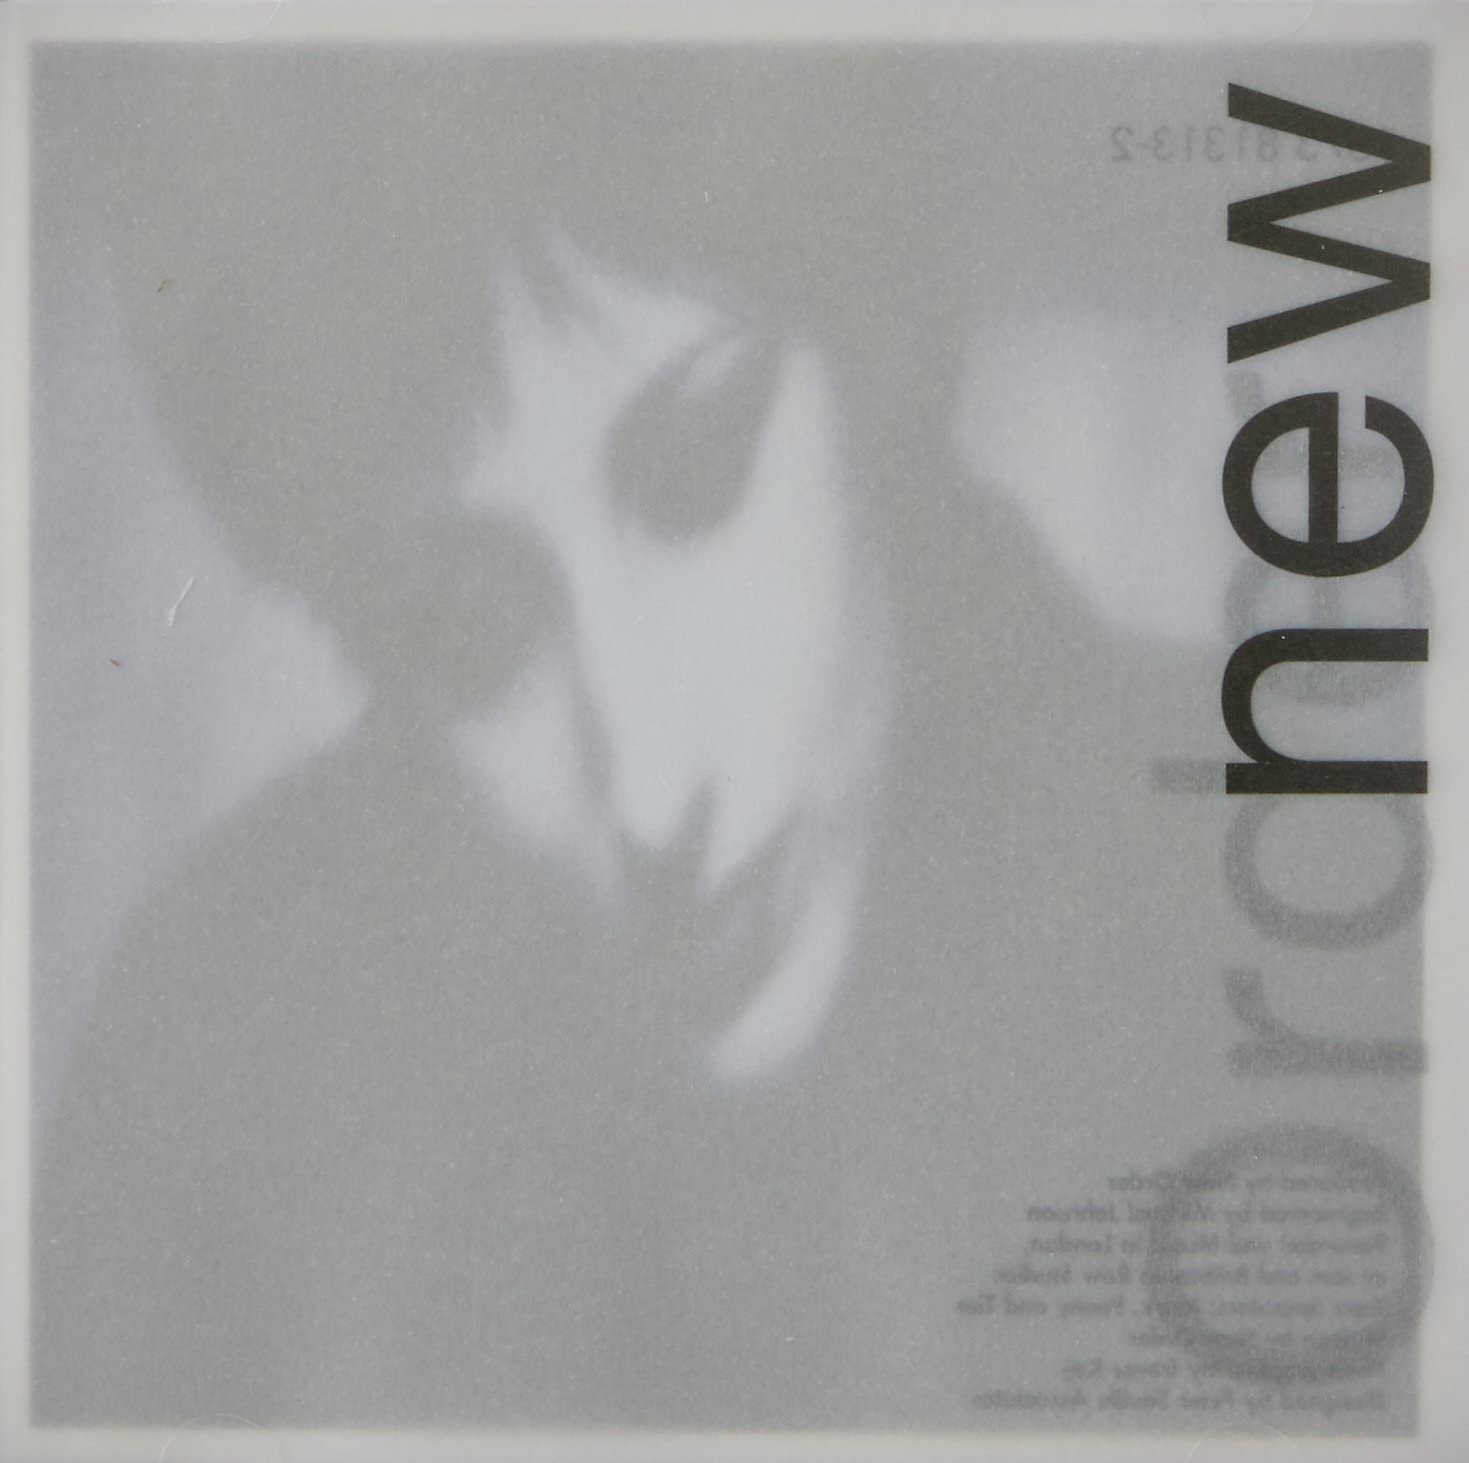 New Order Low-Life CD